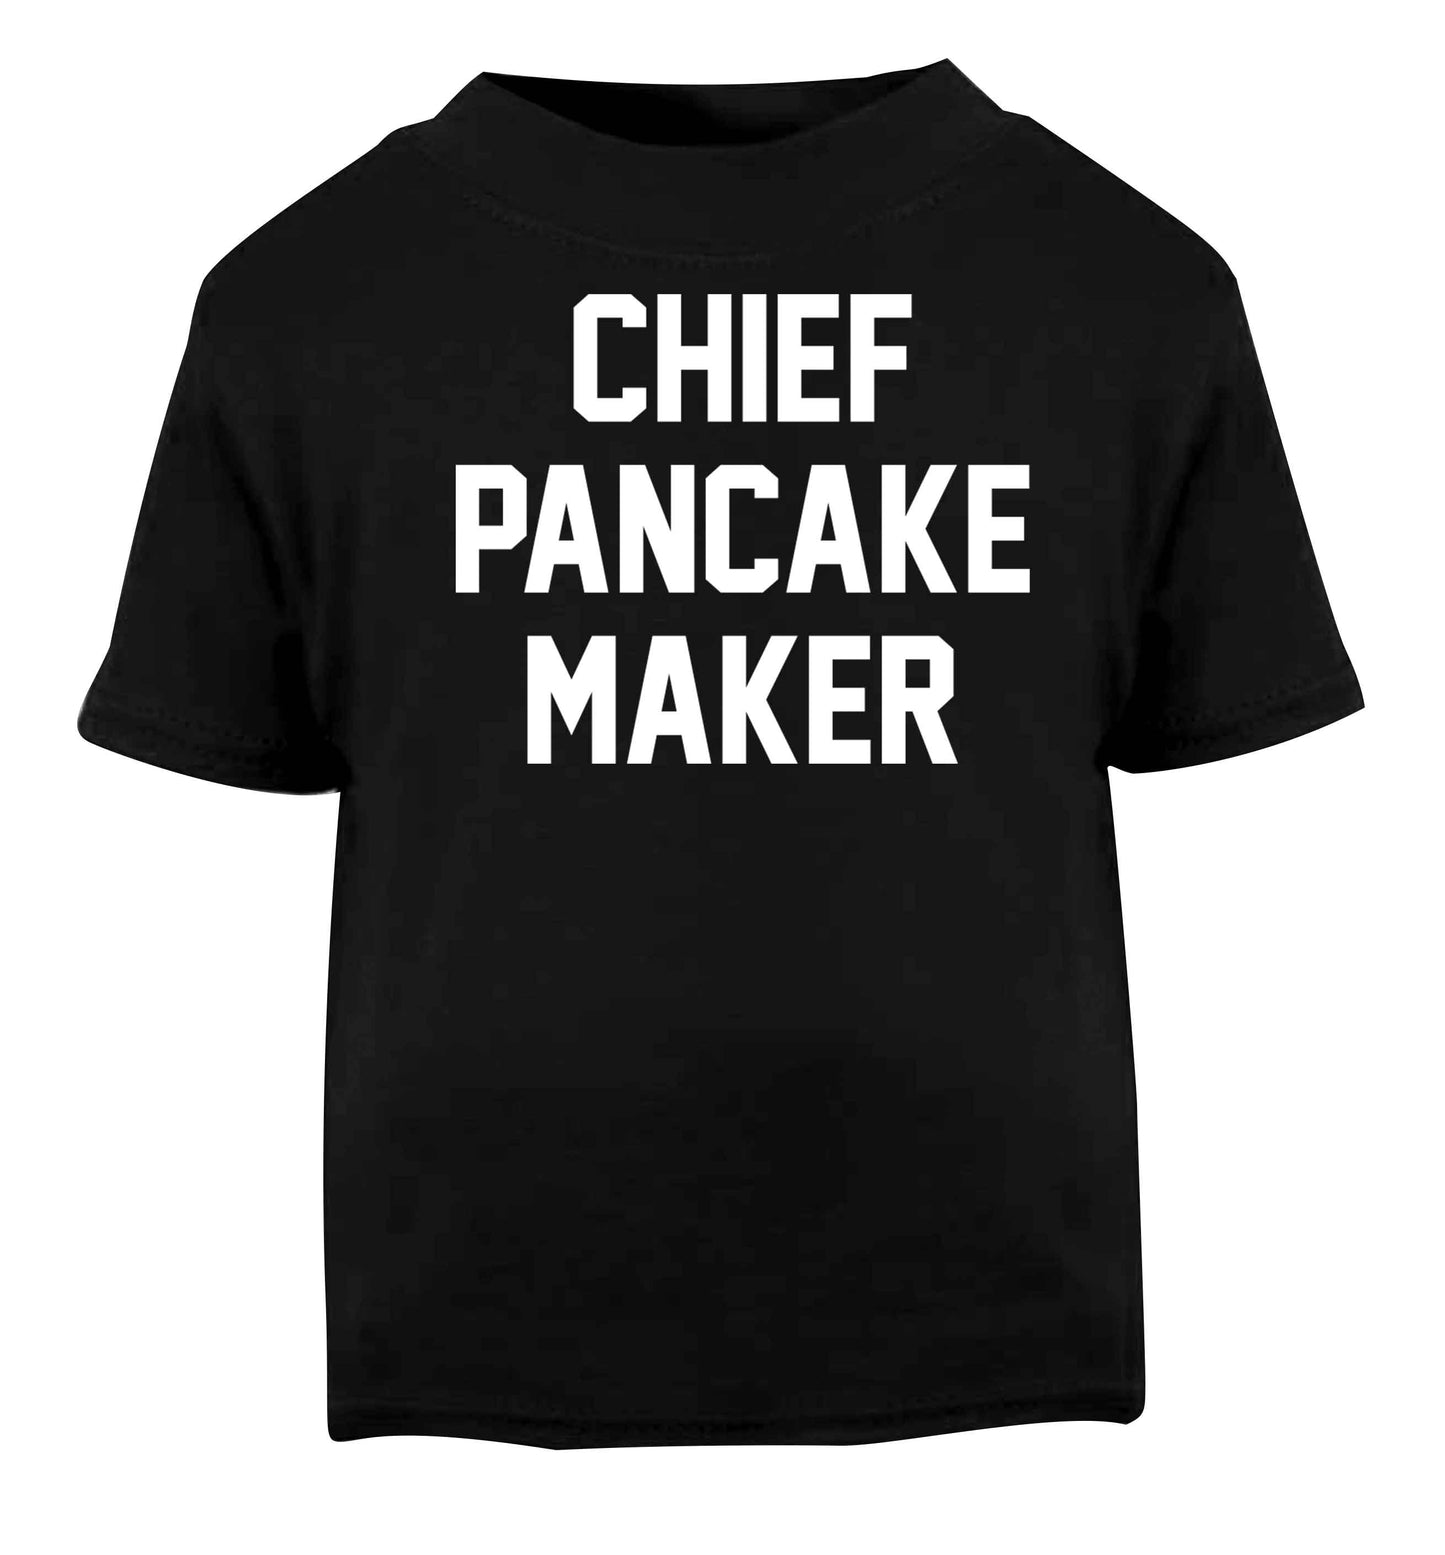 Chief pancake maker Black baby toddler Tshirt 2 years